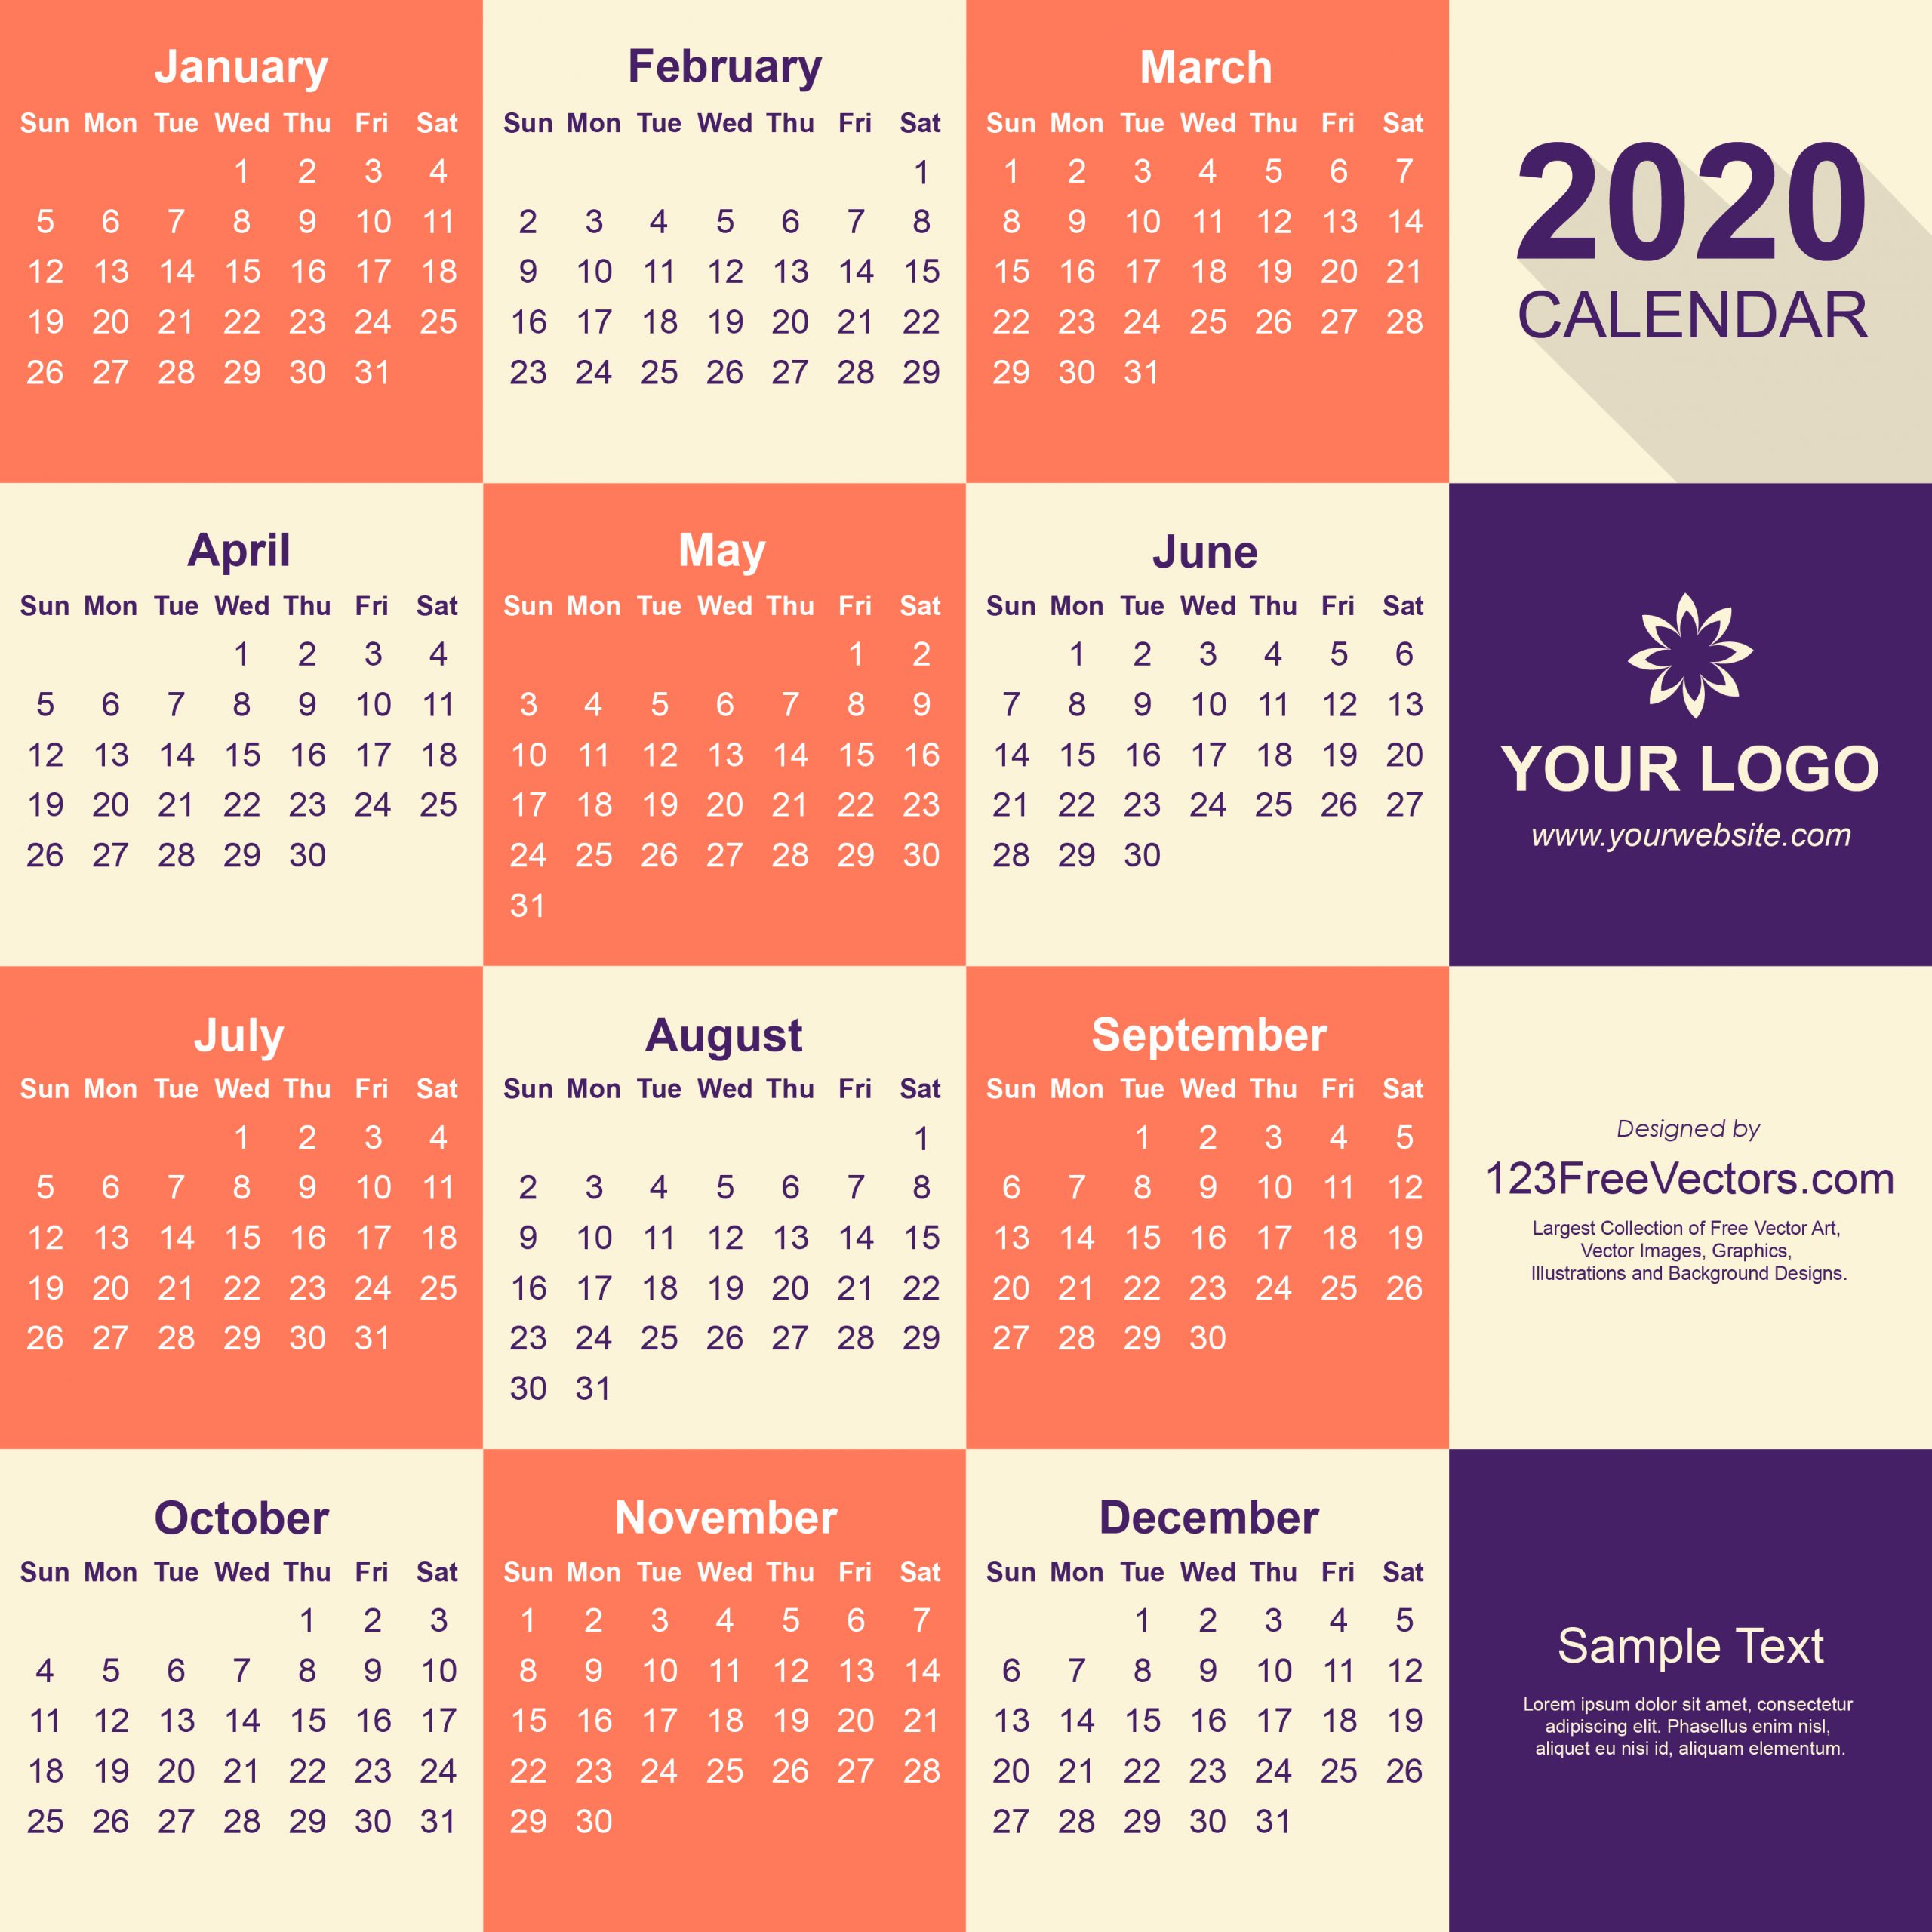 2020 Calendar Pdf Free Download